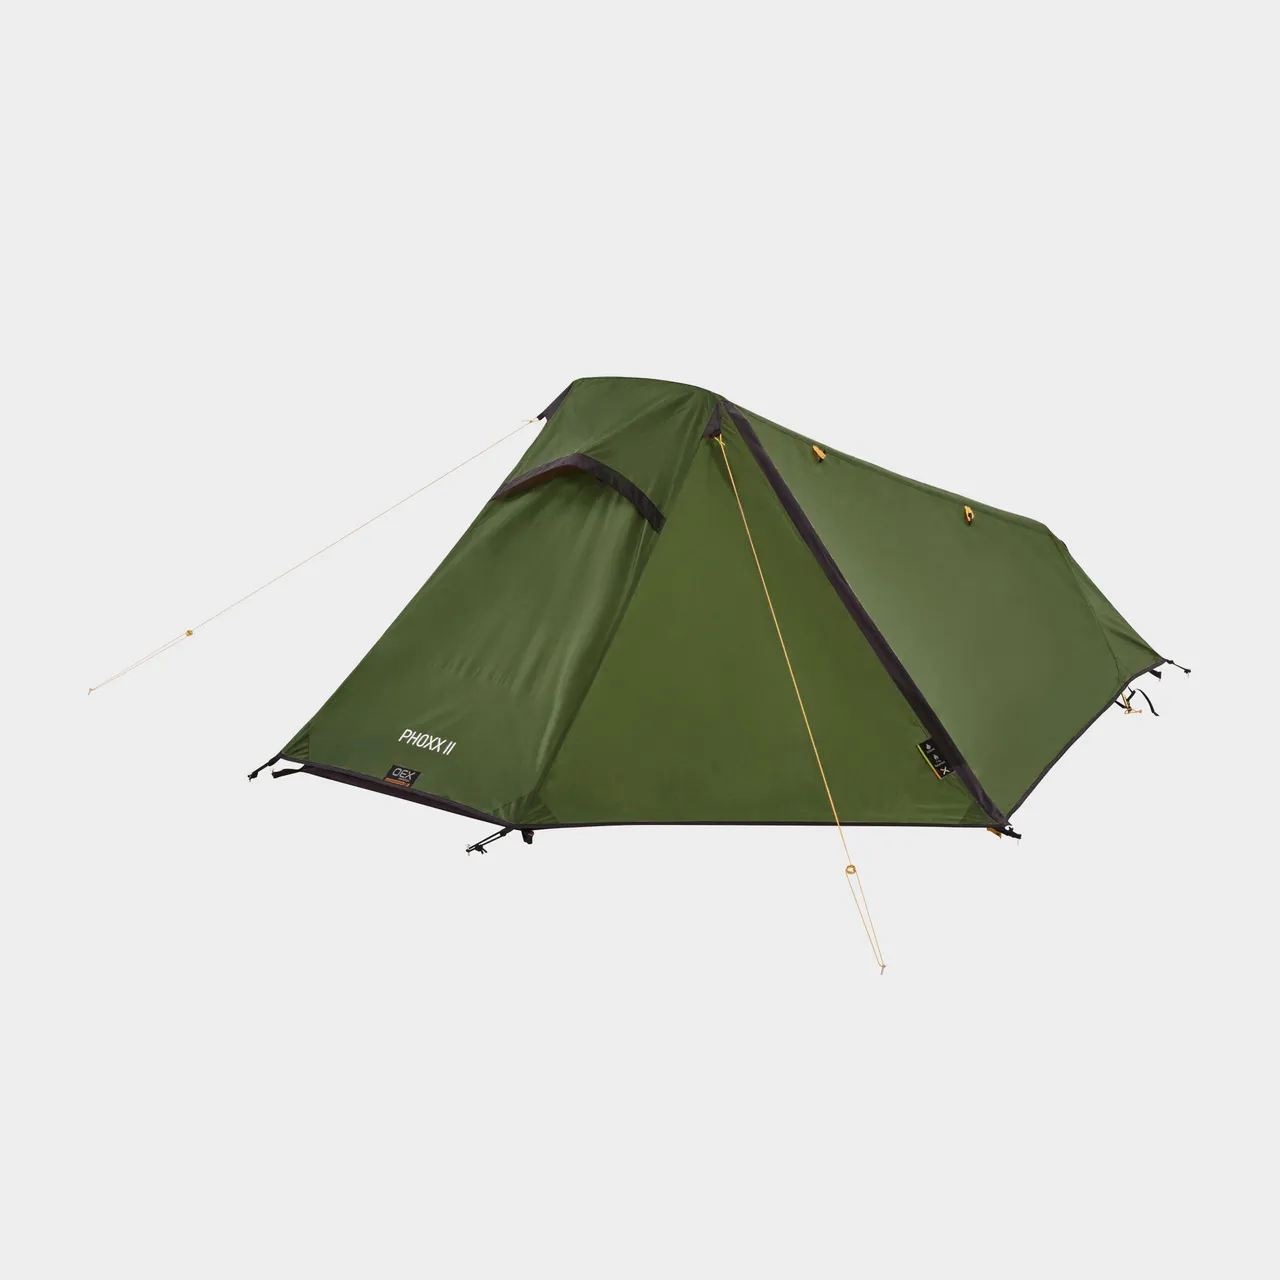 Phoxx 2 II Tent